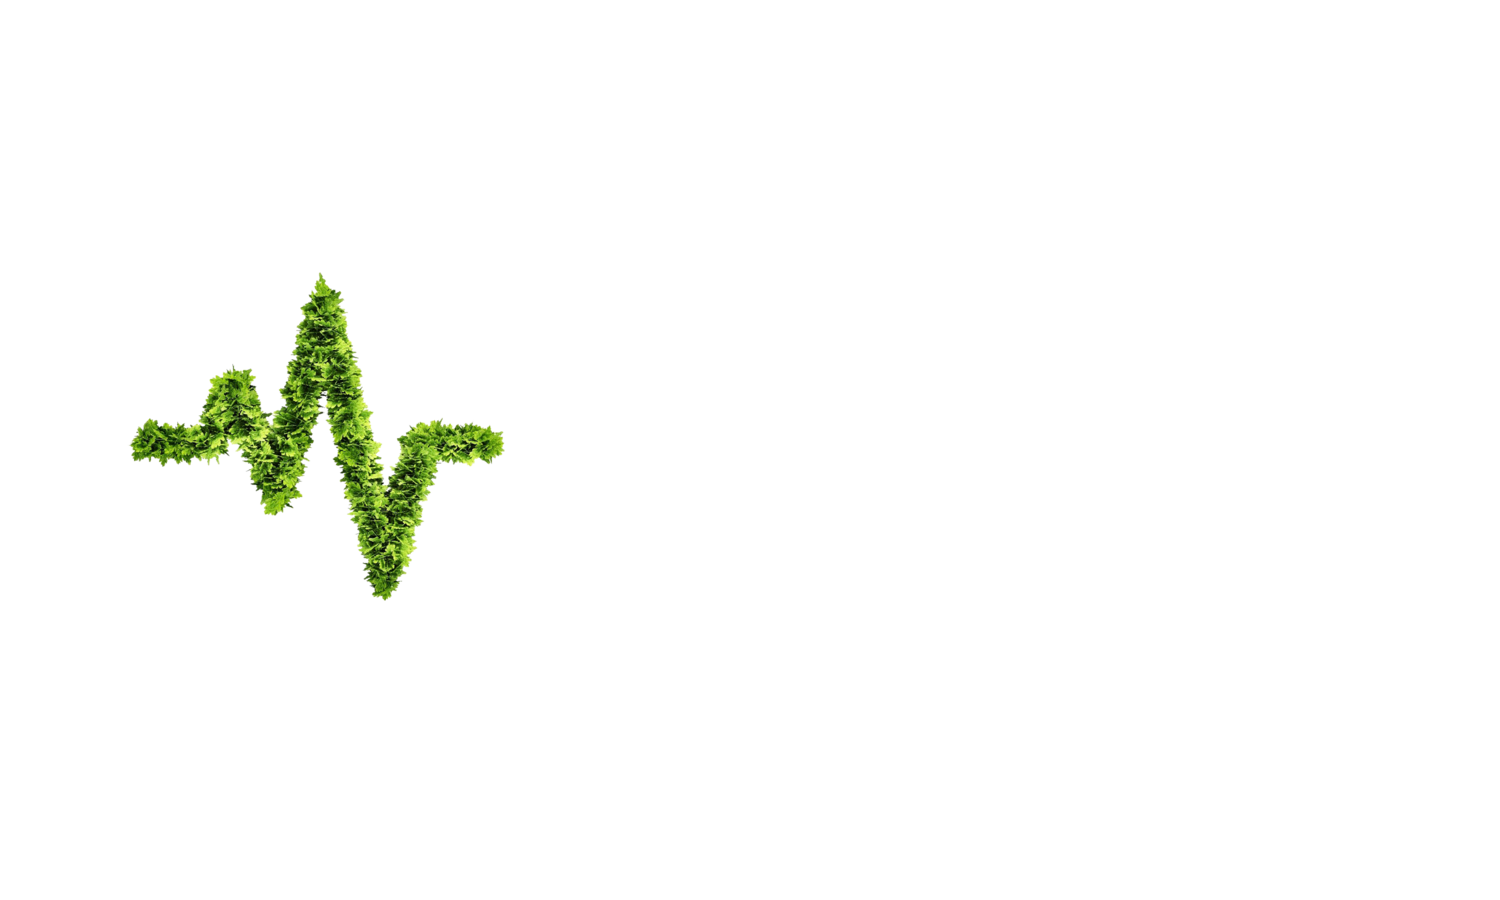 VitalThrive